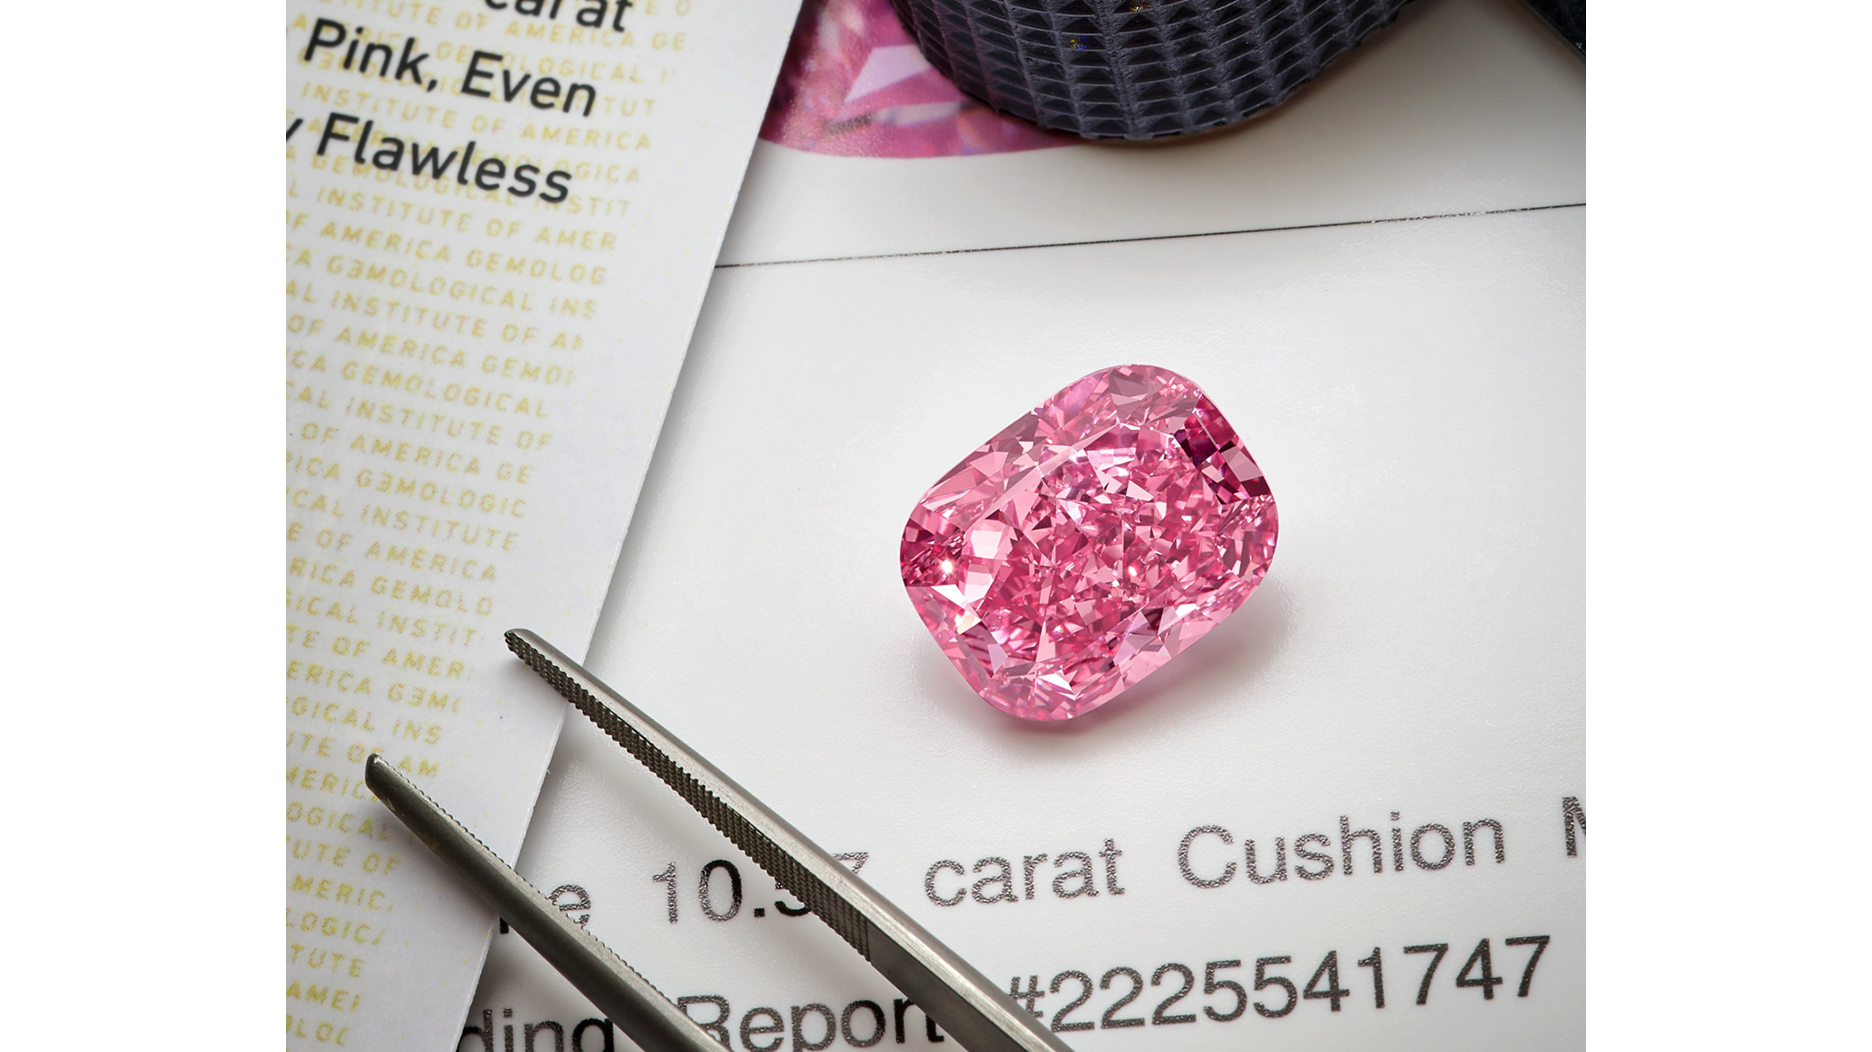 Estrela de Fura' Ruby, Purplish Pink Diamond Sell For $30M+ Each At  Sotheby's